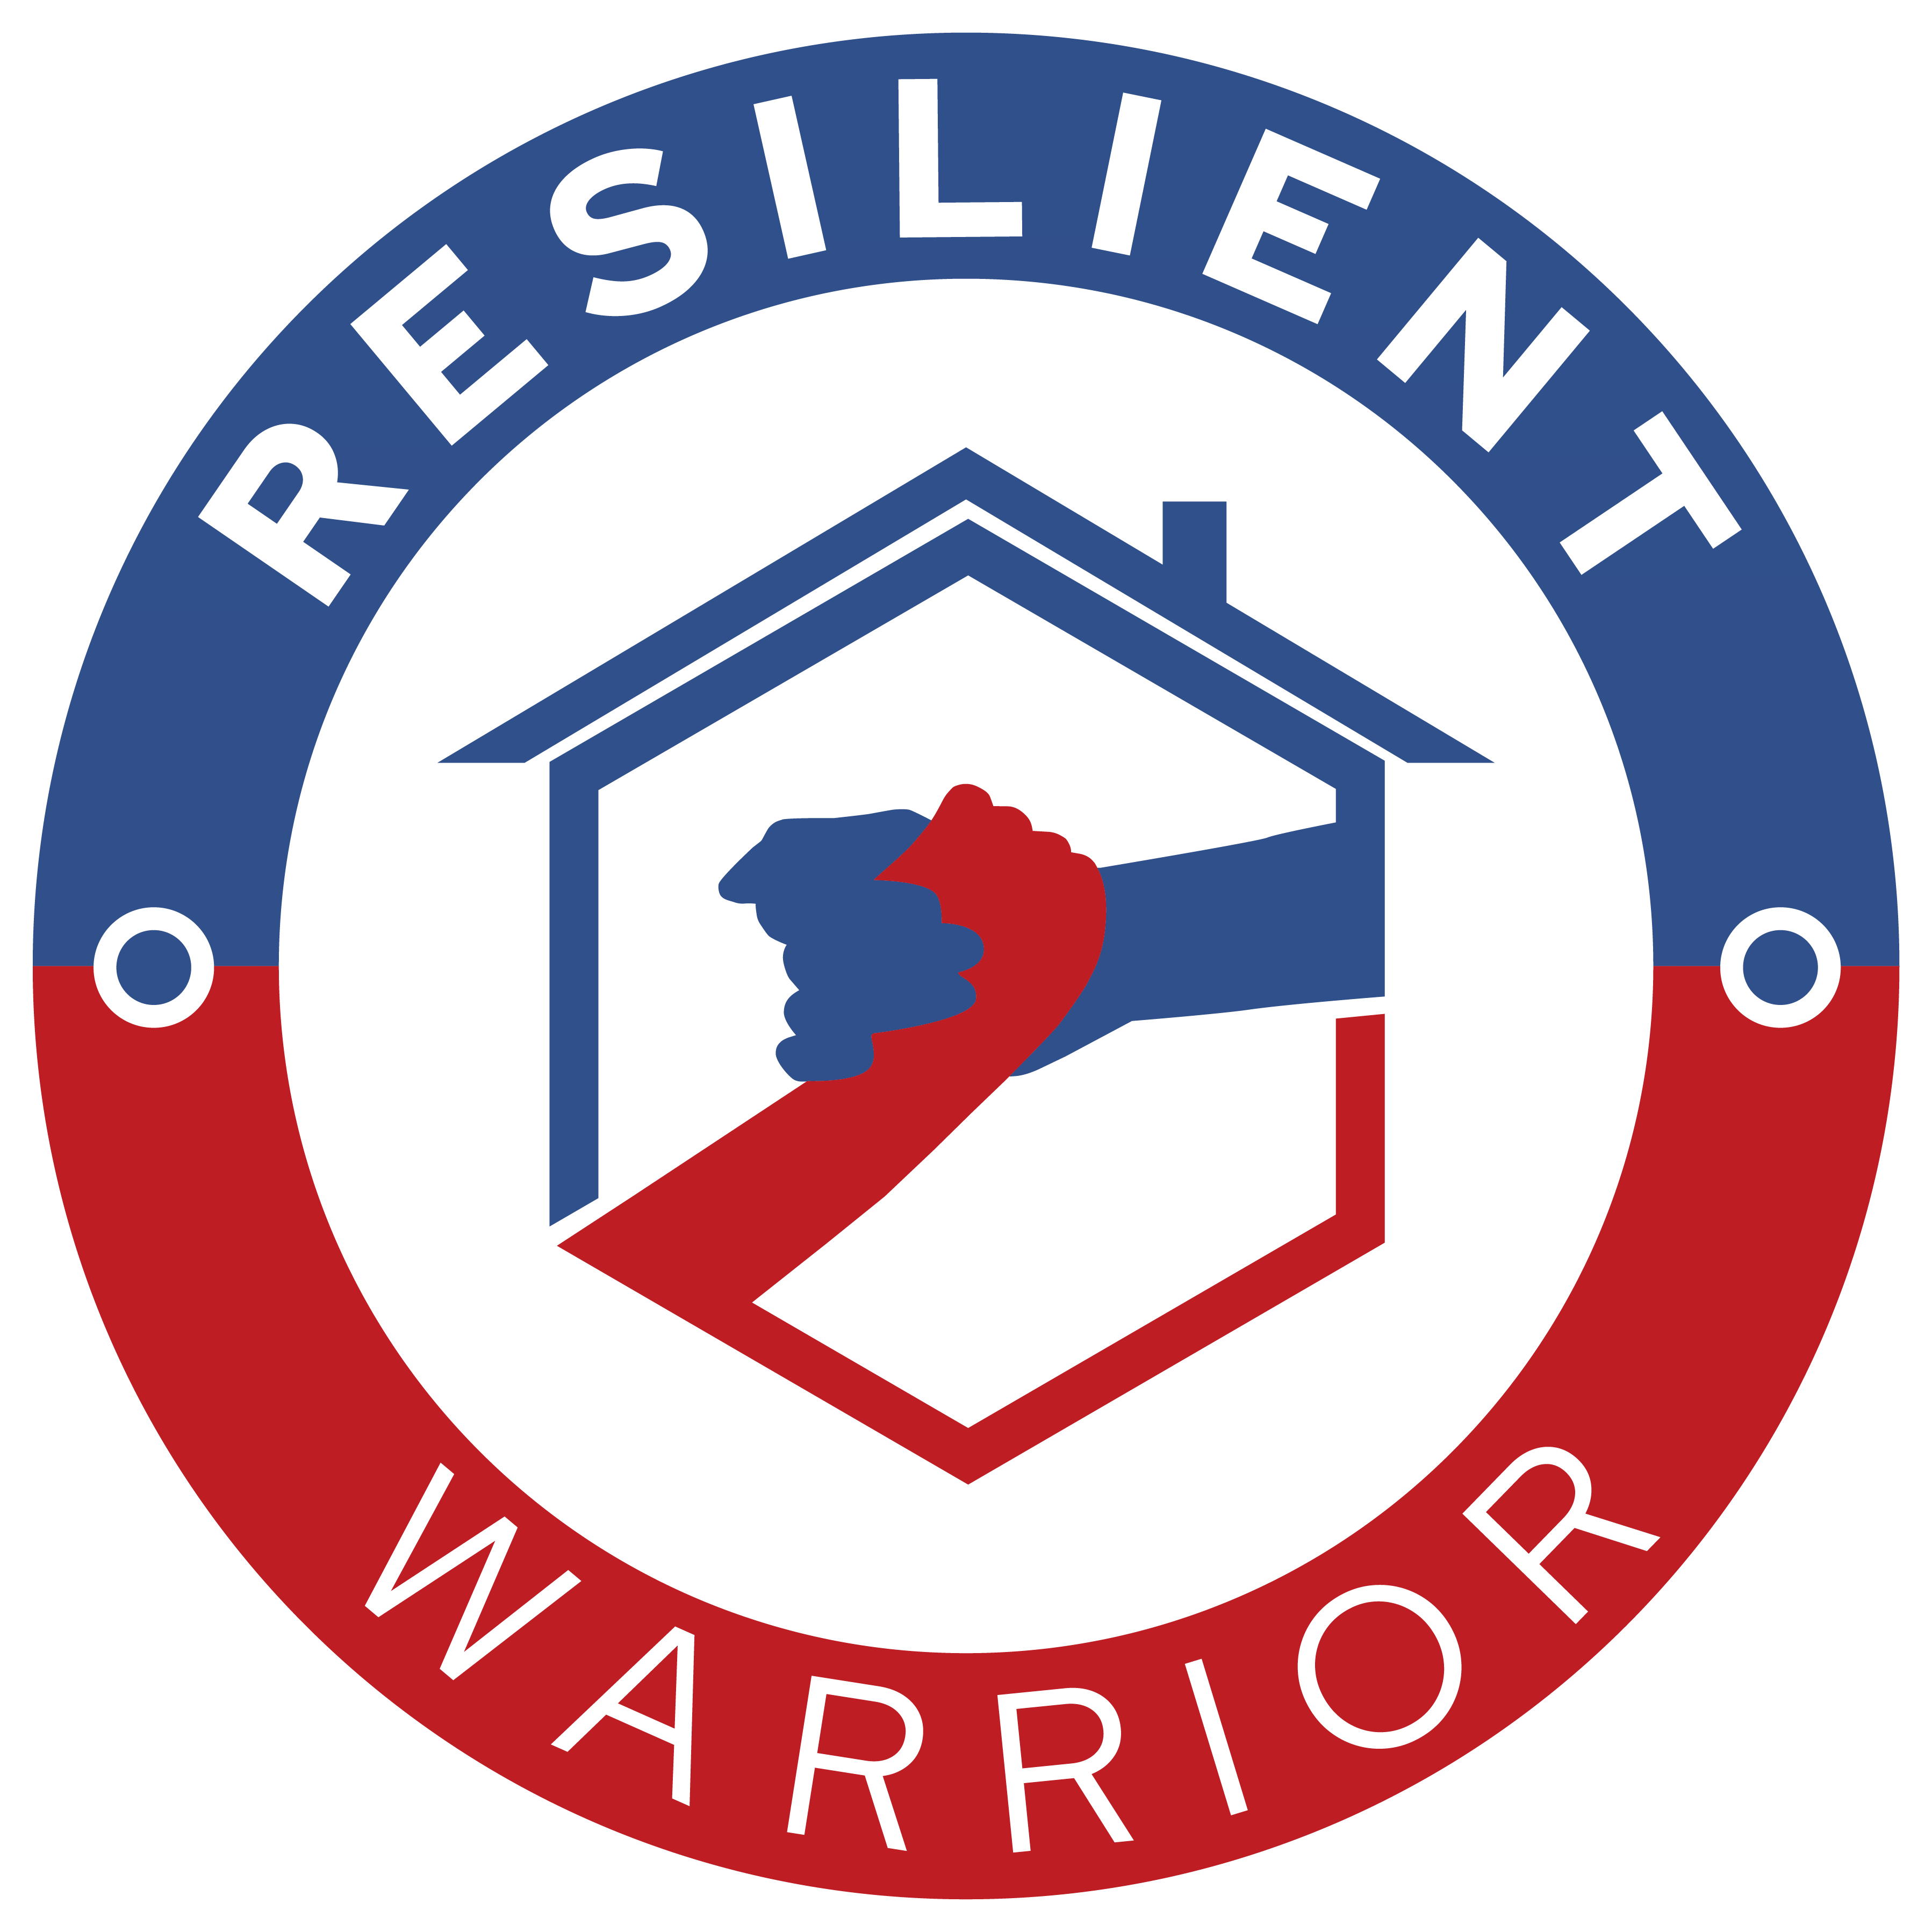 Resilient Warrior